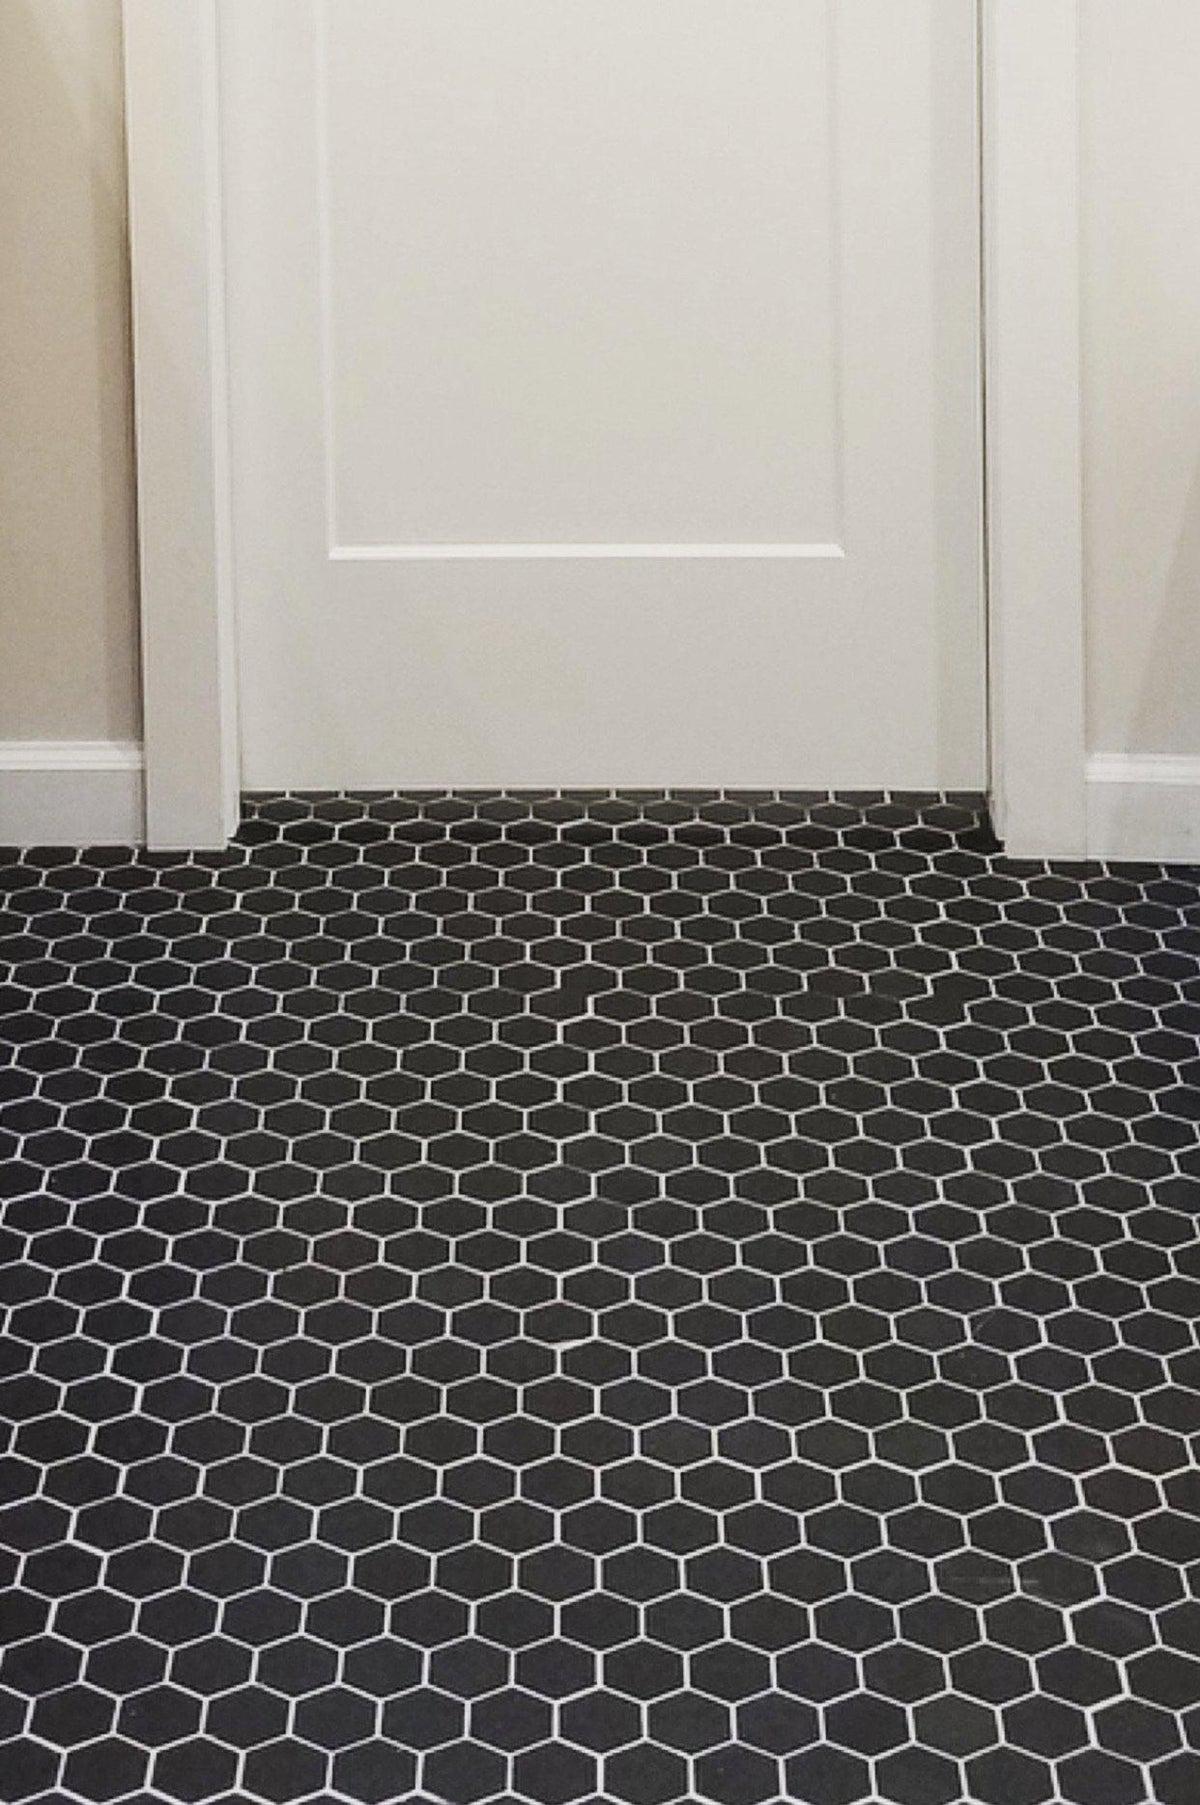 Black marble hexagon tiled bathroom floor